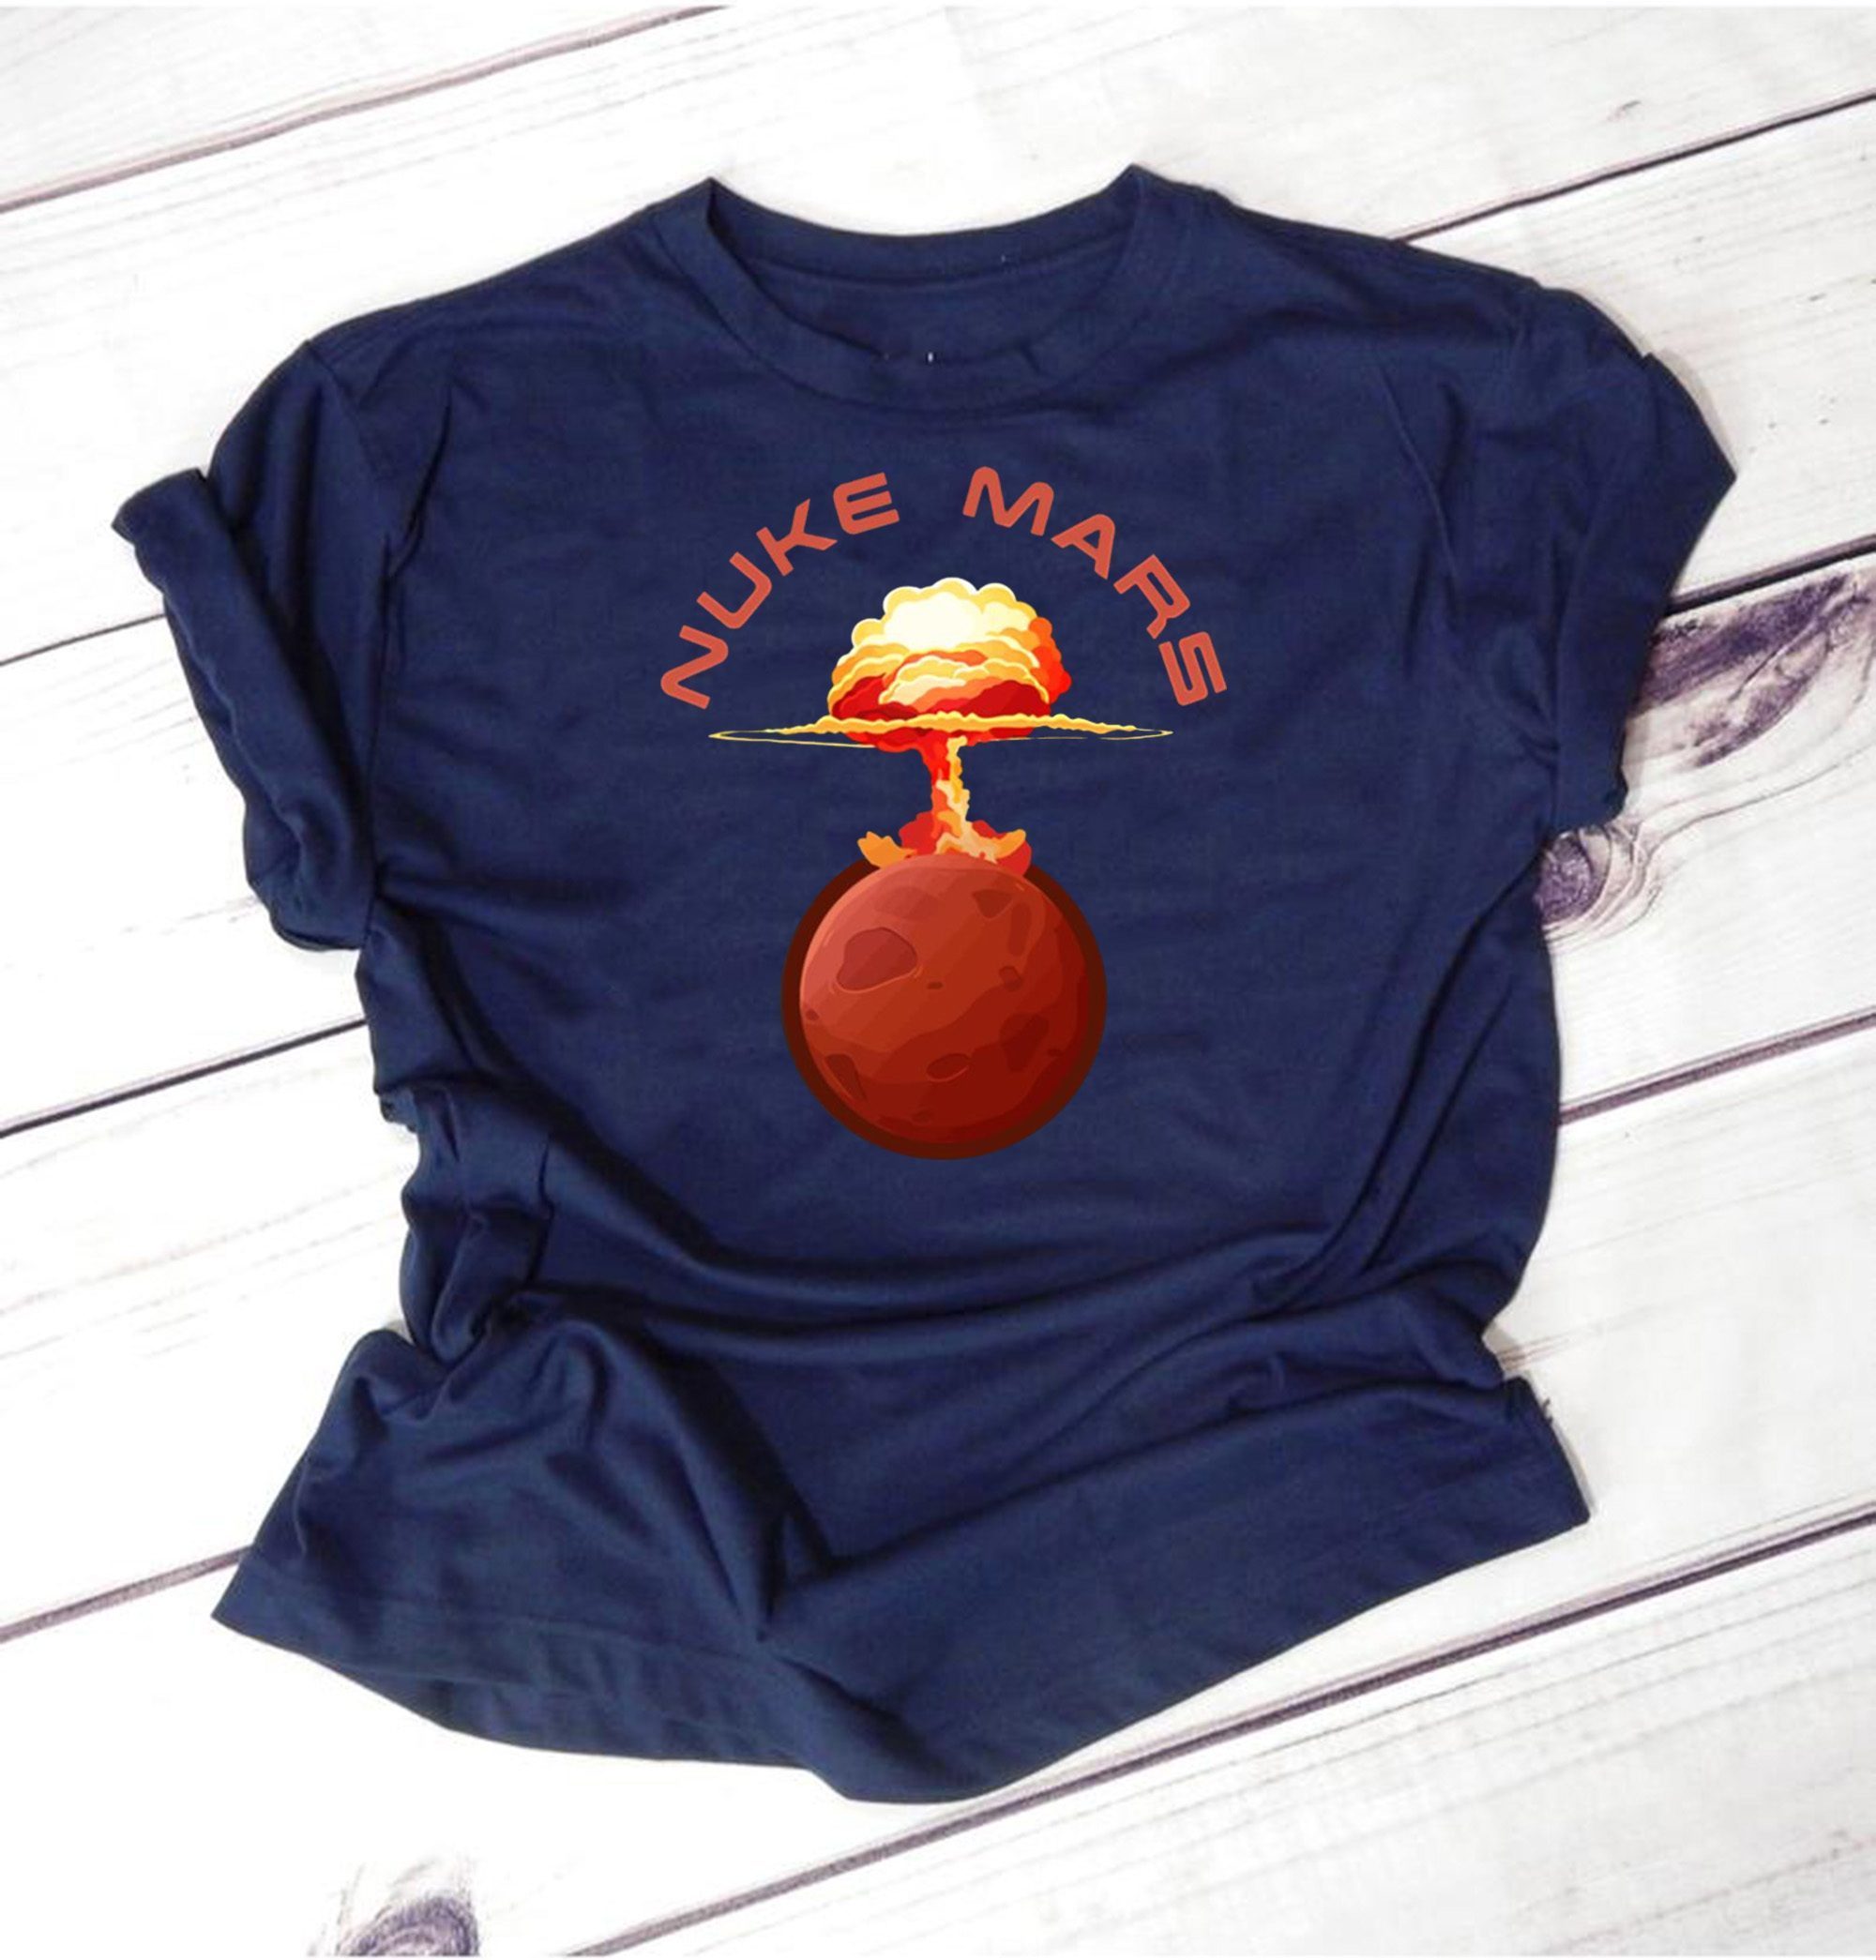 Nuke Mars Will Mars be Buked be Elon Musk Space-X T-Shirts ...